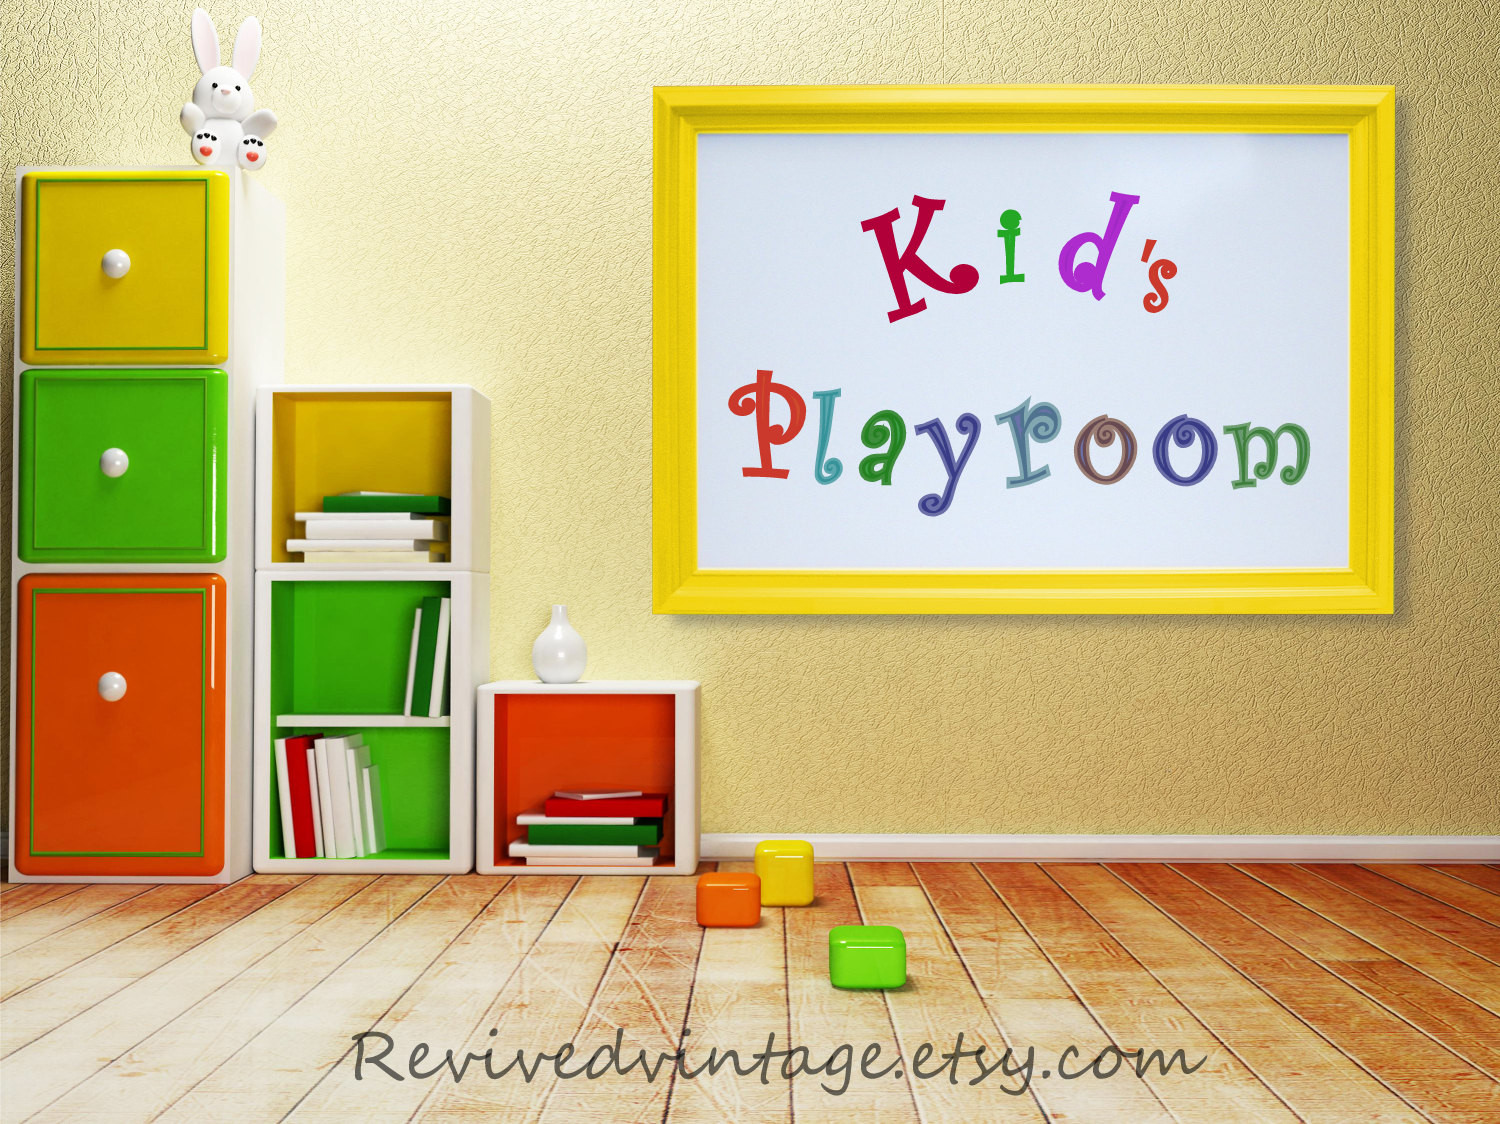 Kids Playroom Wall Art
 KIDS PLAYROOM DECORATION Wall Art Decor Whiteboard